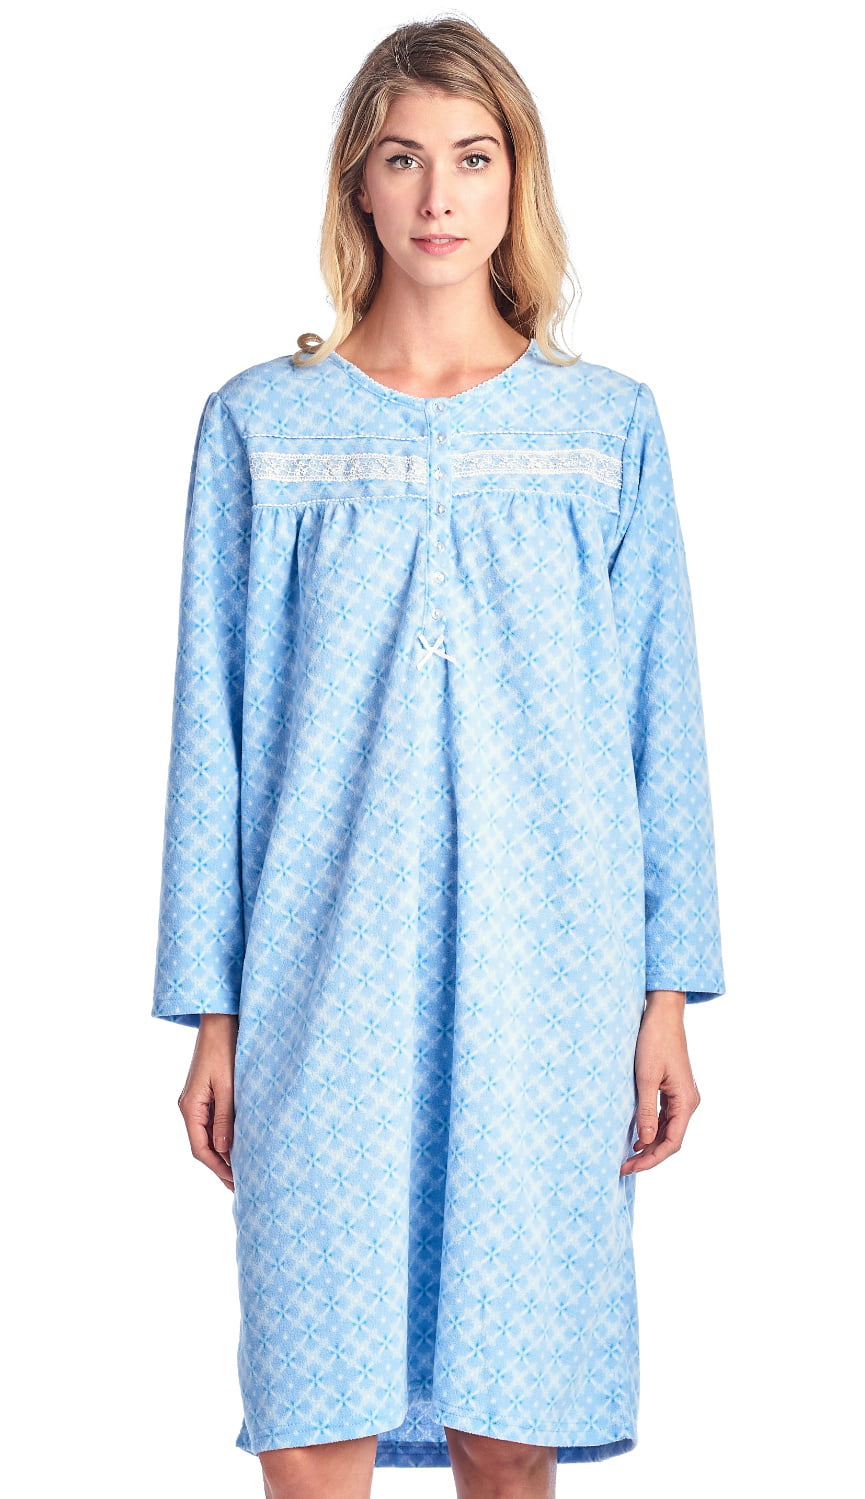 fleece nightgown